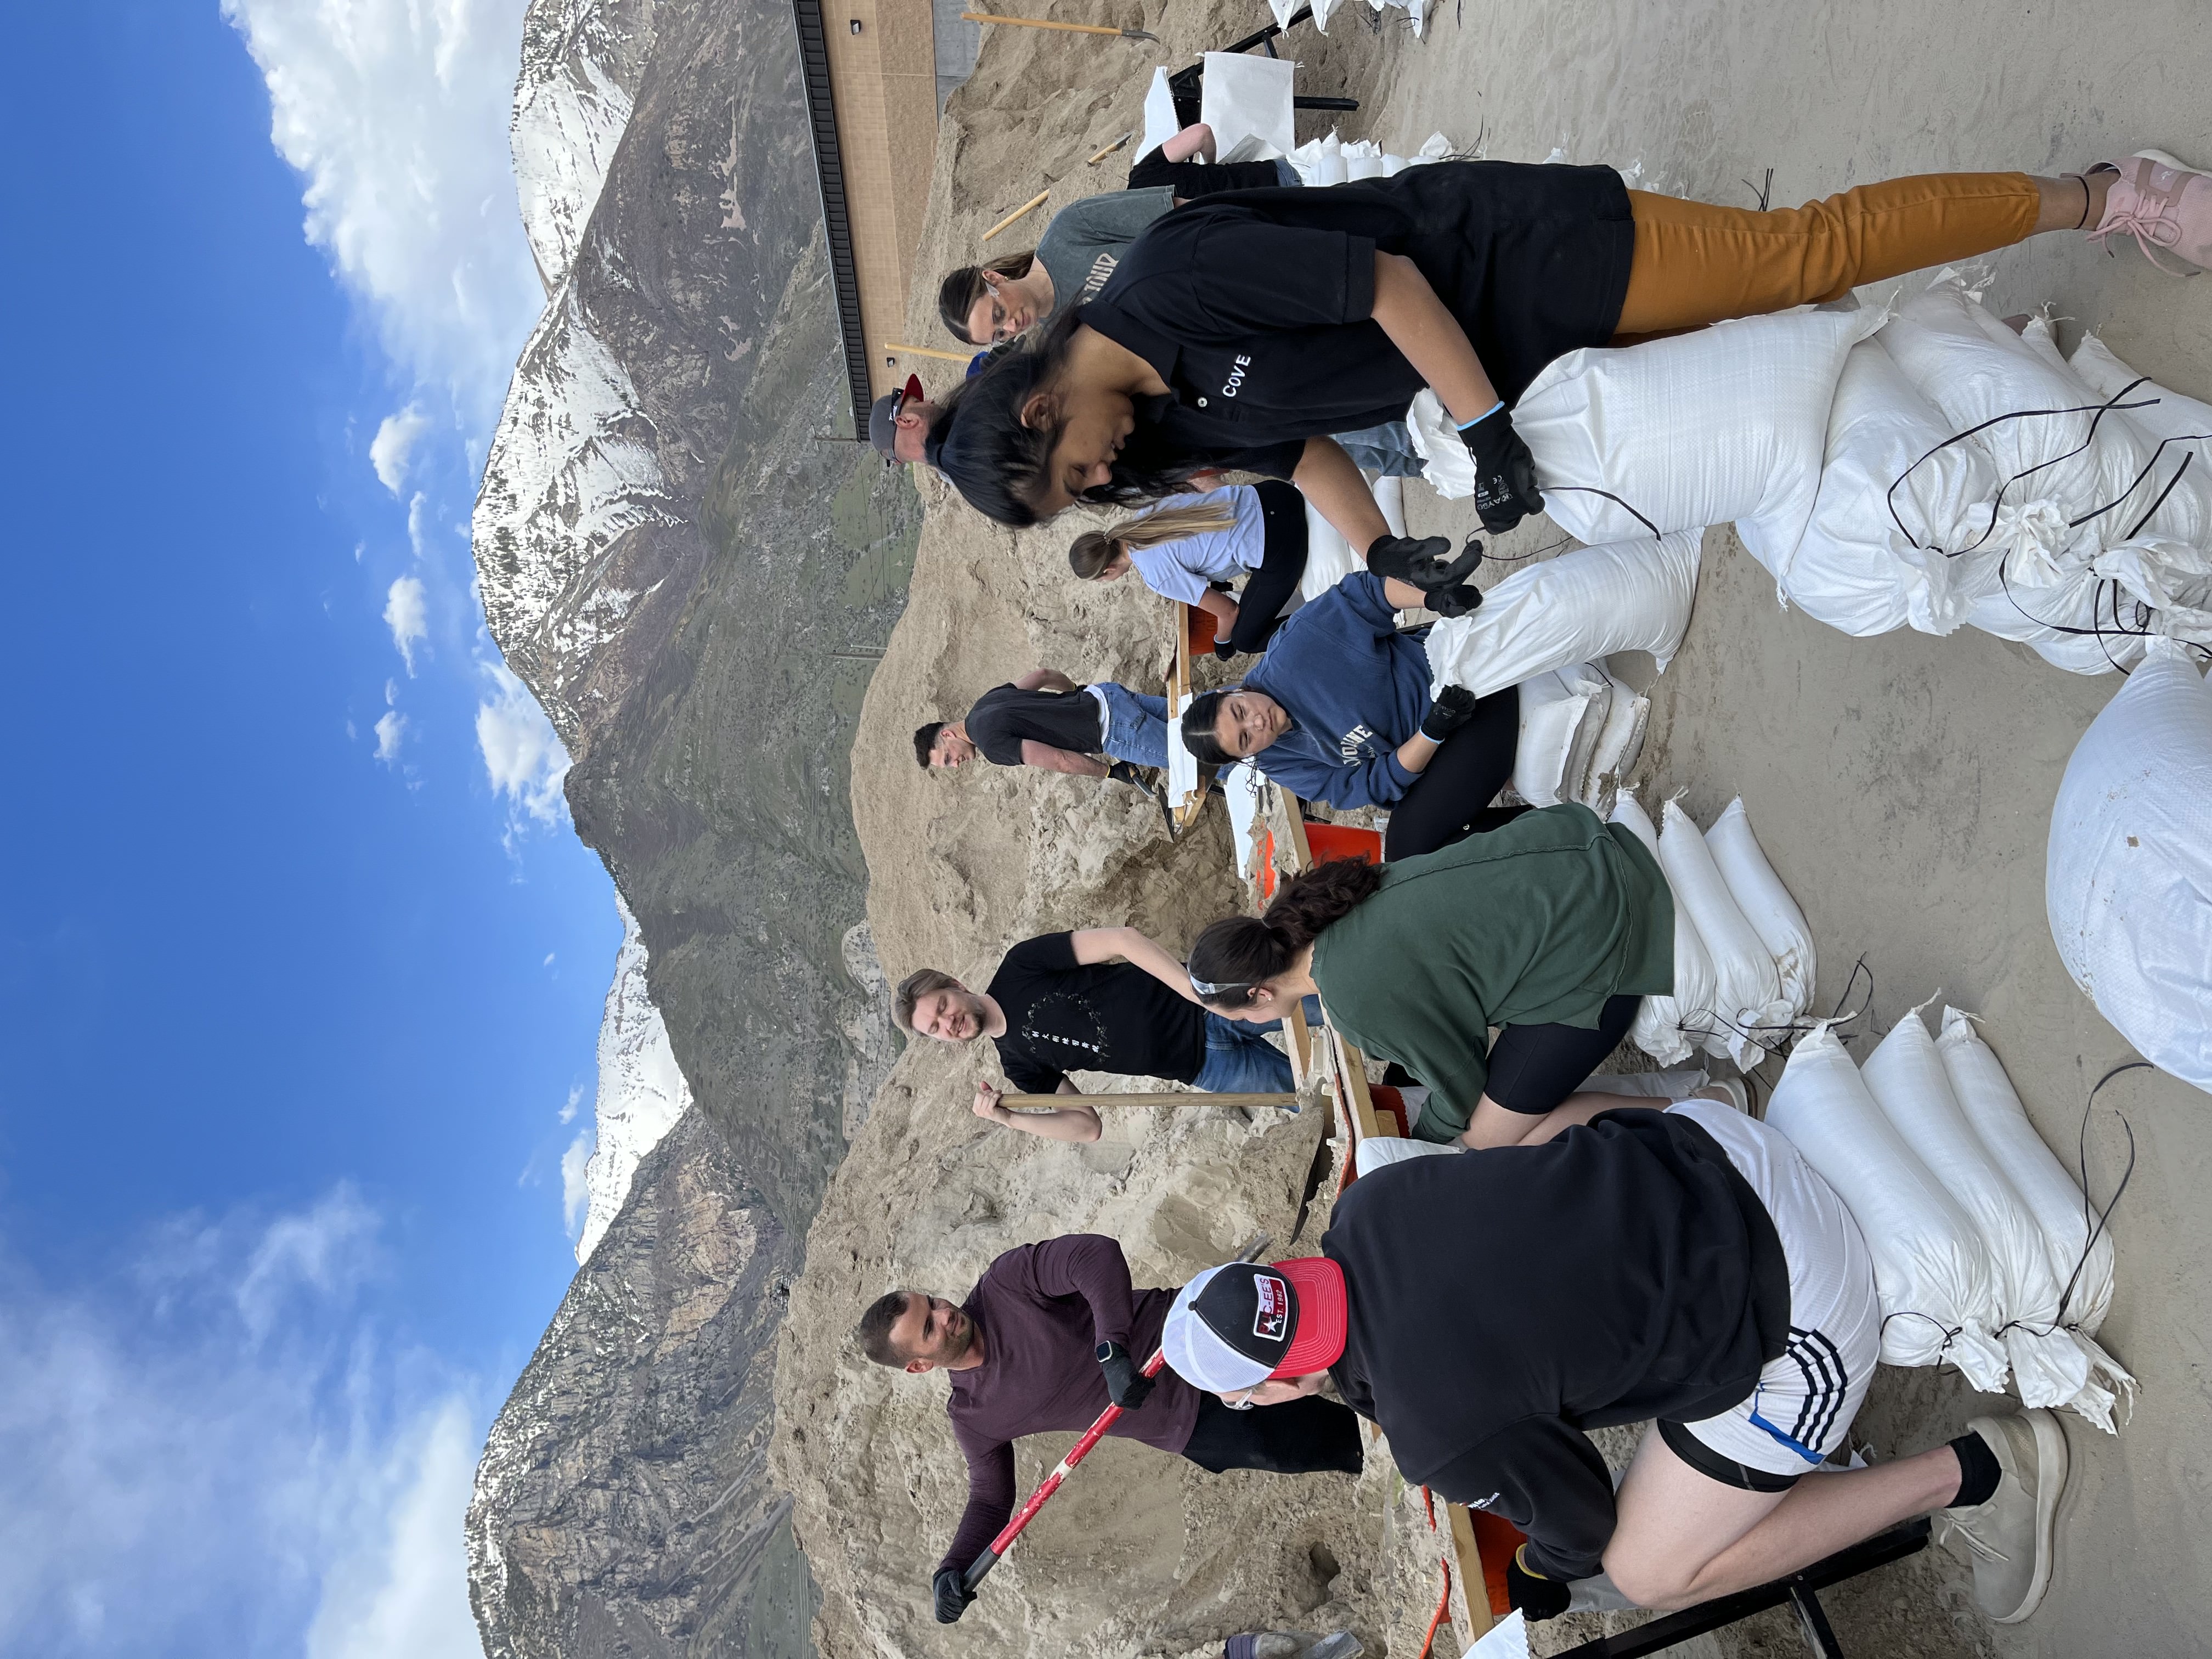 People in the Utah County community serve by filling sandbags.